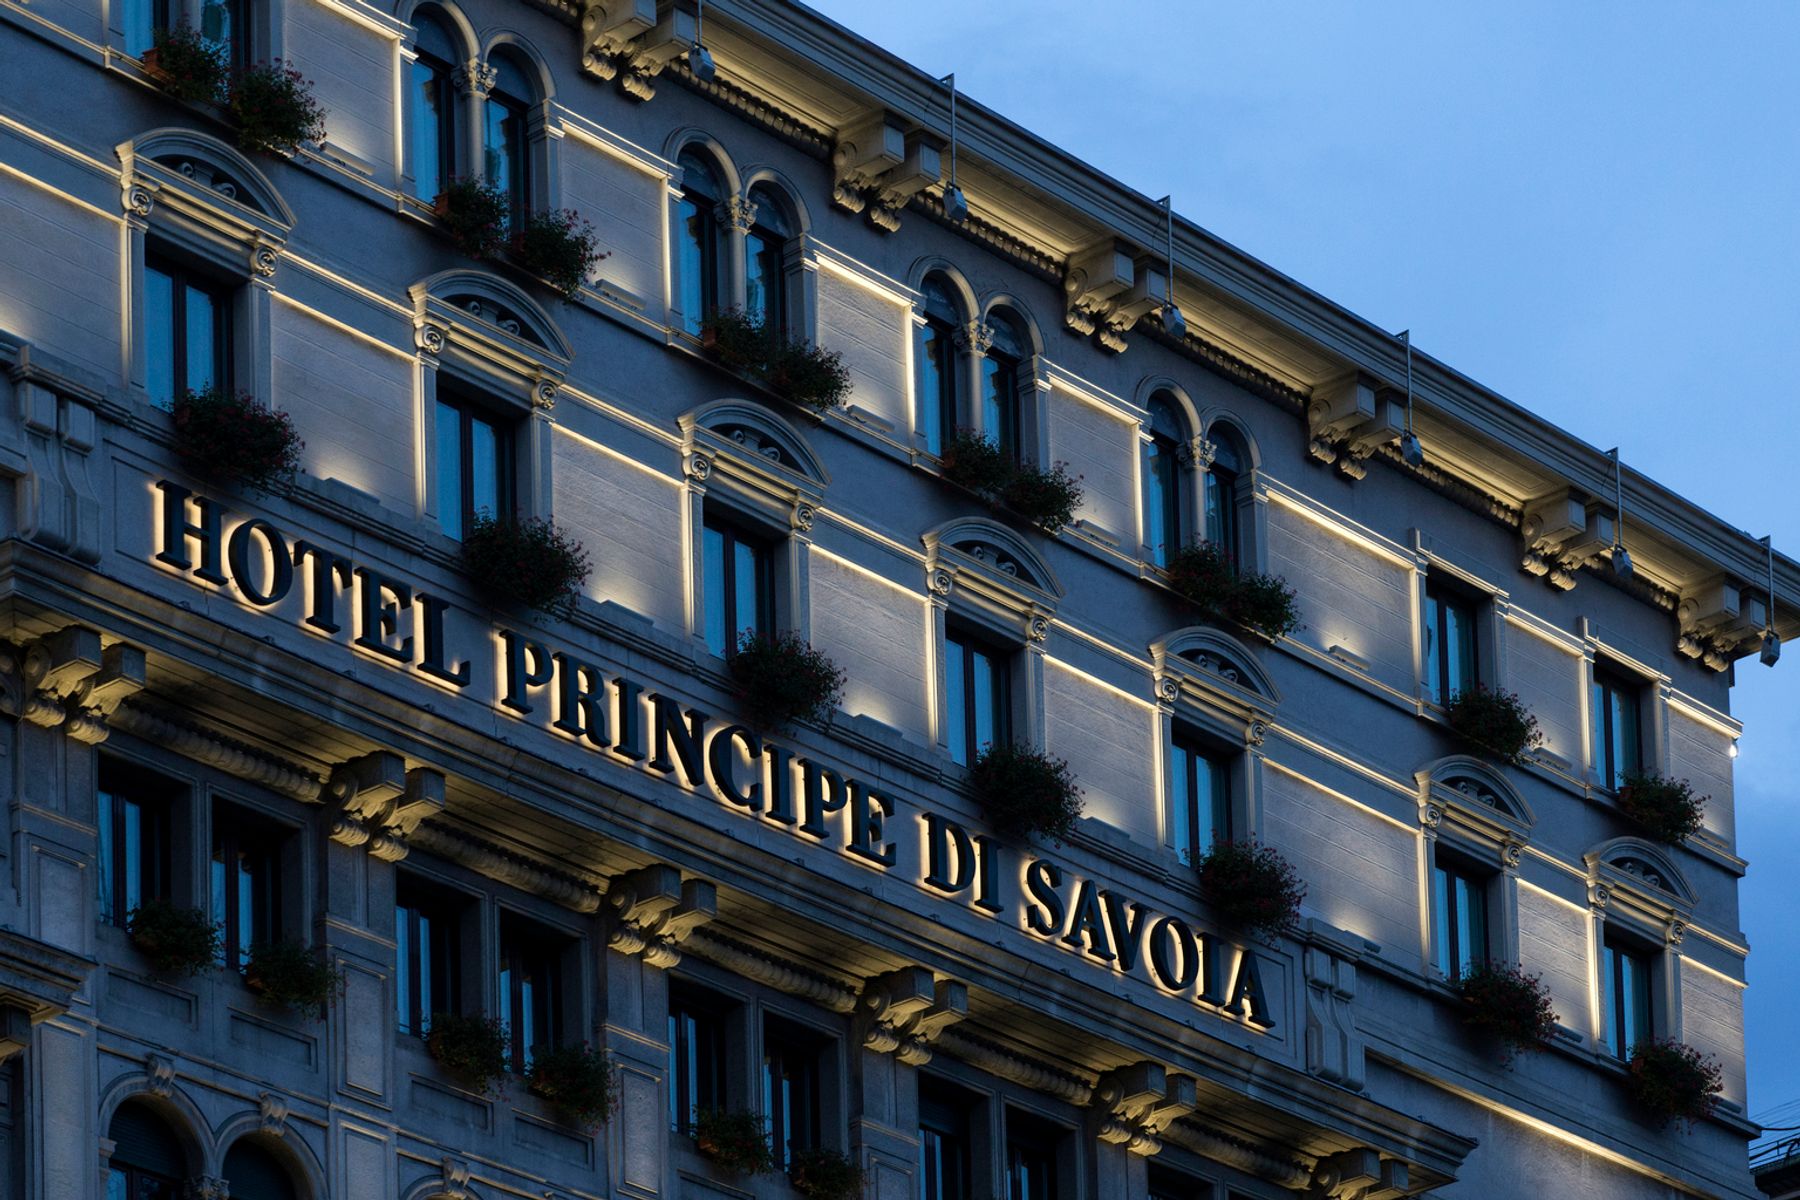 Hotel Principe di Savoia, Milan. Architecture: Cesare Tenca. Lighting design: Marco Nereo Rotelli, Milan. Photography: Dirk Vogel, Altena.